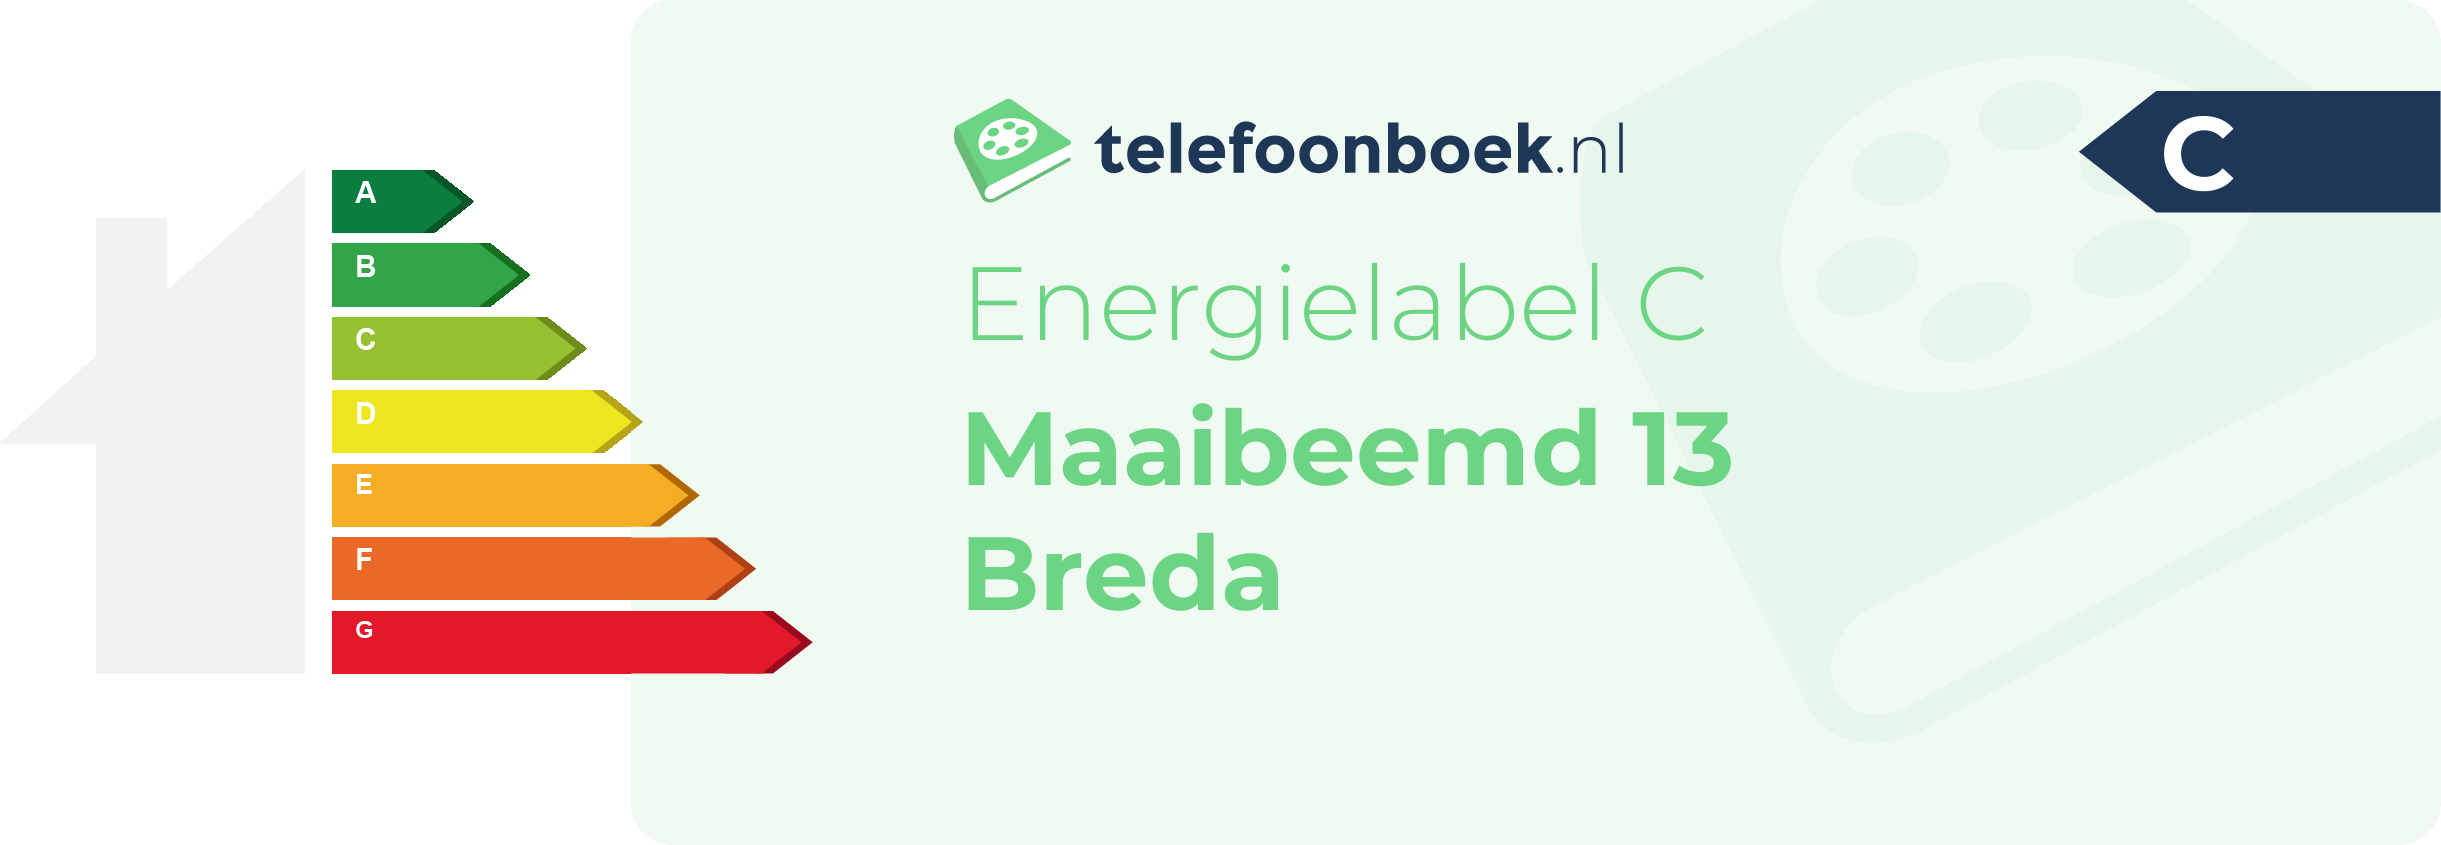 Energielabel Maaibeemd 13 Breda